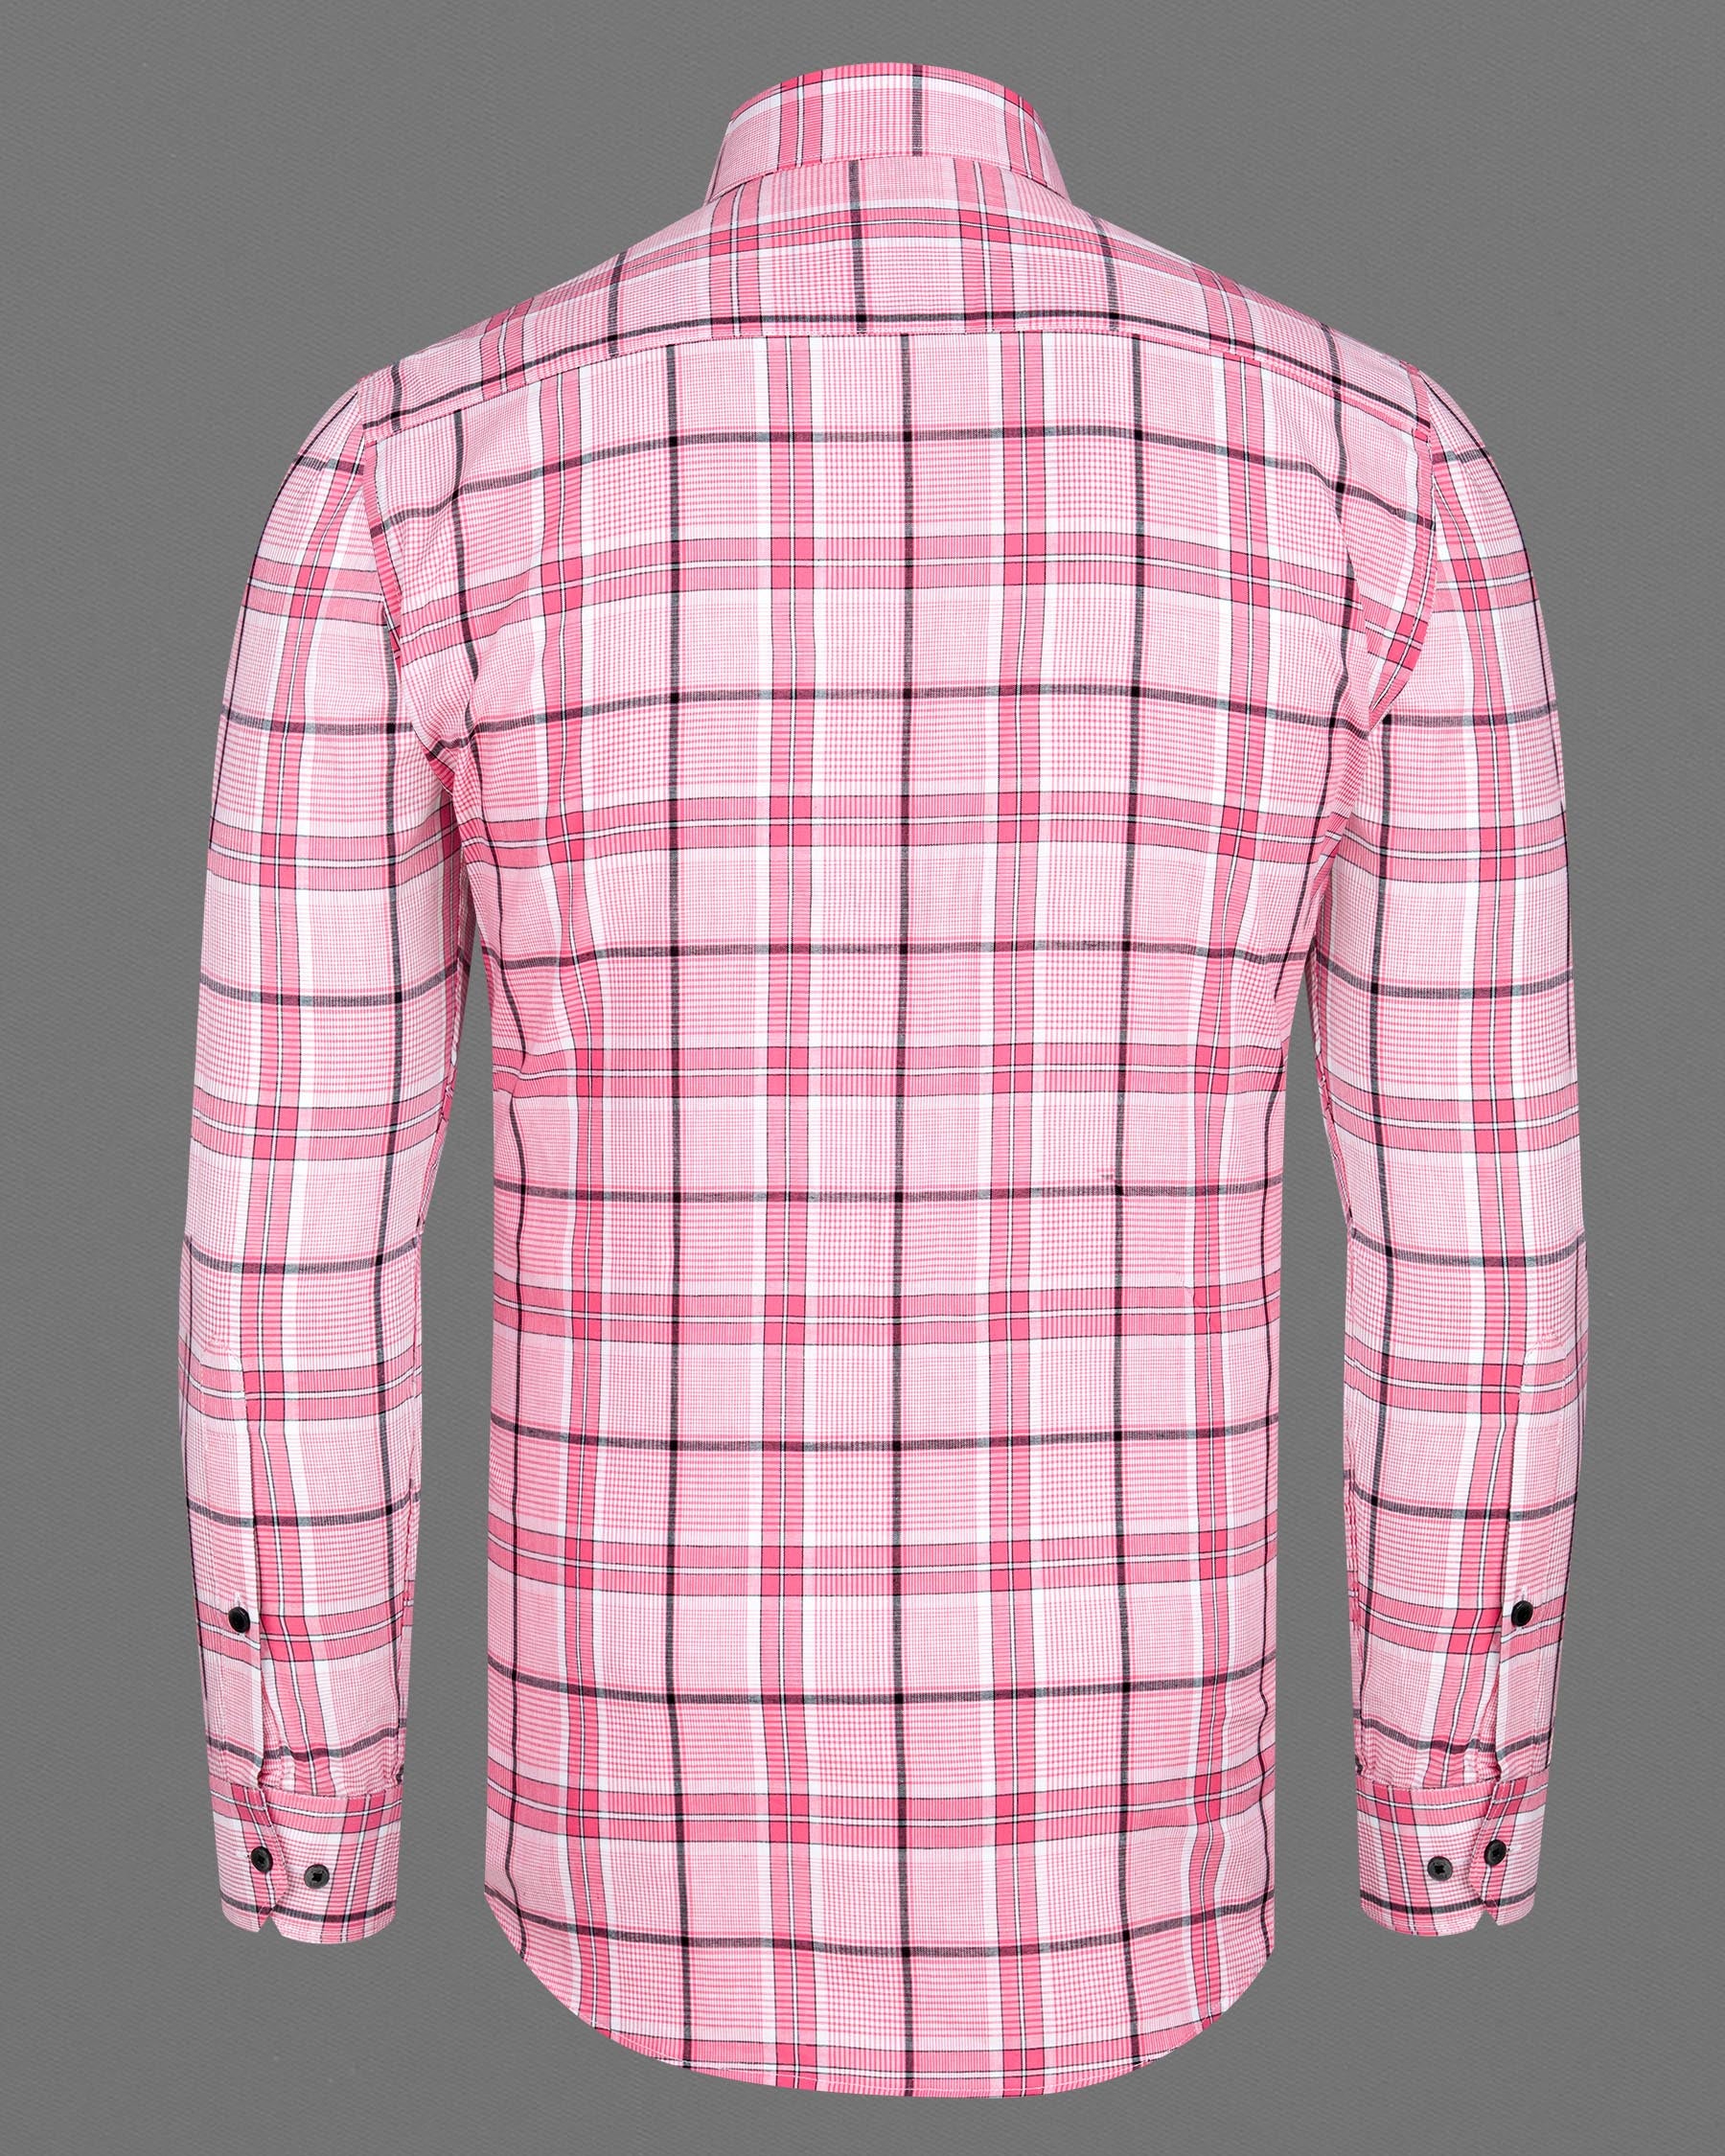 Deep Blush Pink Plaid Premium Cotton Shirt 7246-BLK-38, 7246-BLK-H-38, 7246-BLK-39, 7246-BLK-H-39, 7246-BLK-40, 7246-BLK-H-40, 7246-BLK-42, 7246-BLK-H-42, 7246-BLK-44, 7246-BLK-H-44, 7246-BLK-46, 7246-BLK-H-46, 7246-BLK-48, 7246-BLK-H-48, 7246-BLK-50, 7246-BLK-H-50, 7246-BLK-52, 7246-BLK-H-52